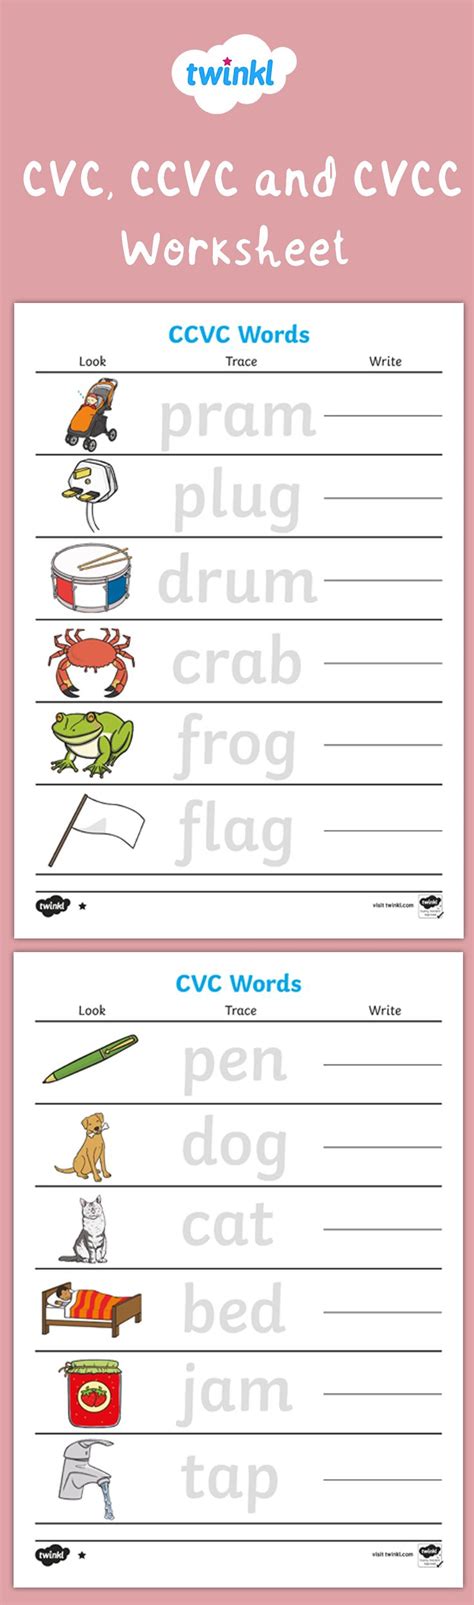 Cvc Ccvc And Cvcc Worksheet Ccvc Words Cvcc Words Ccvc